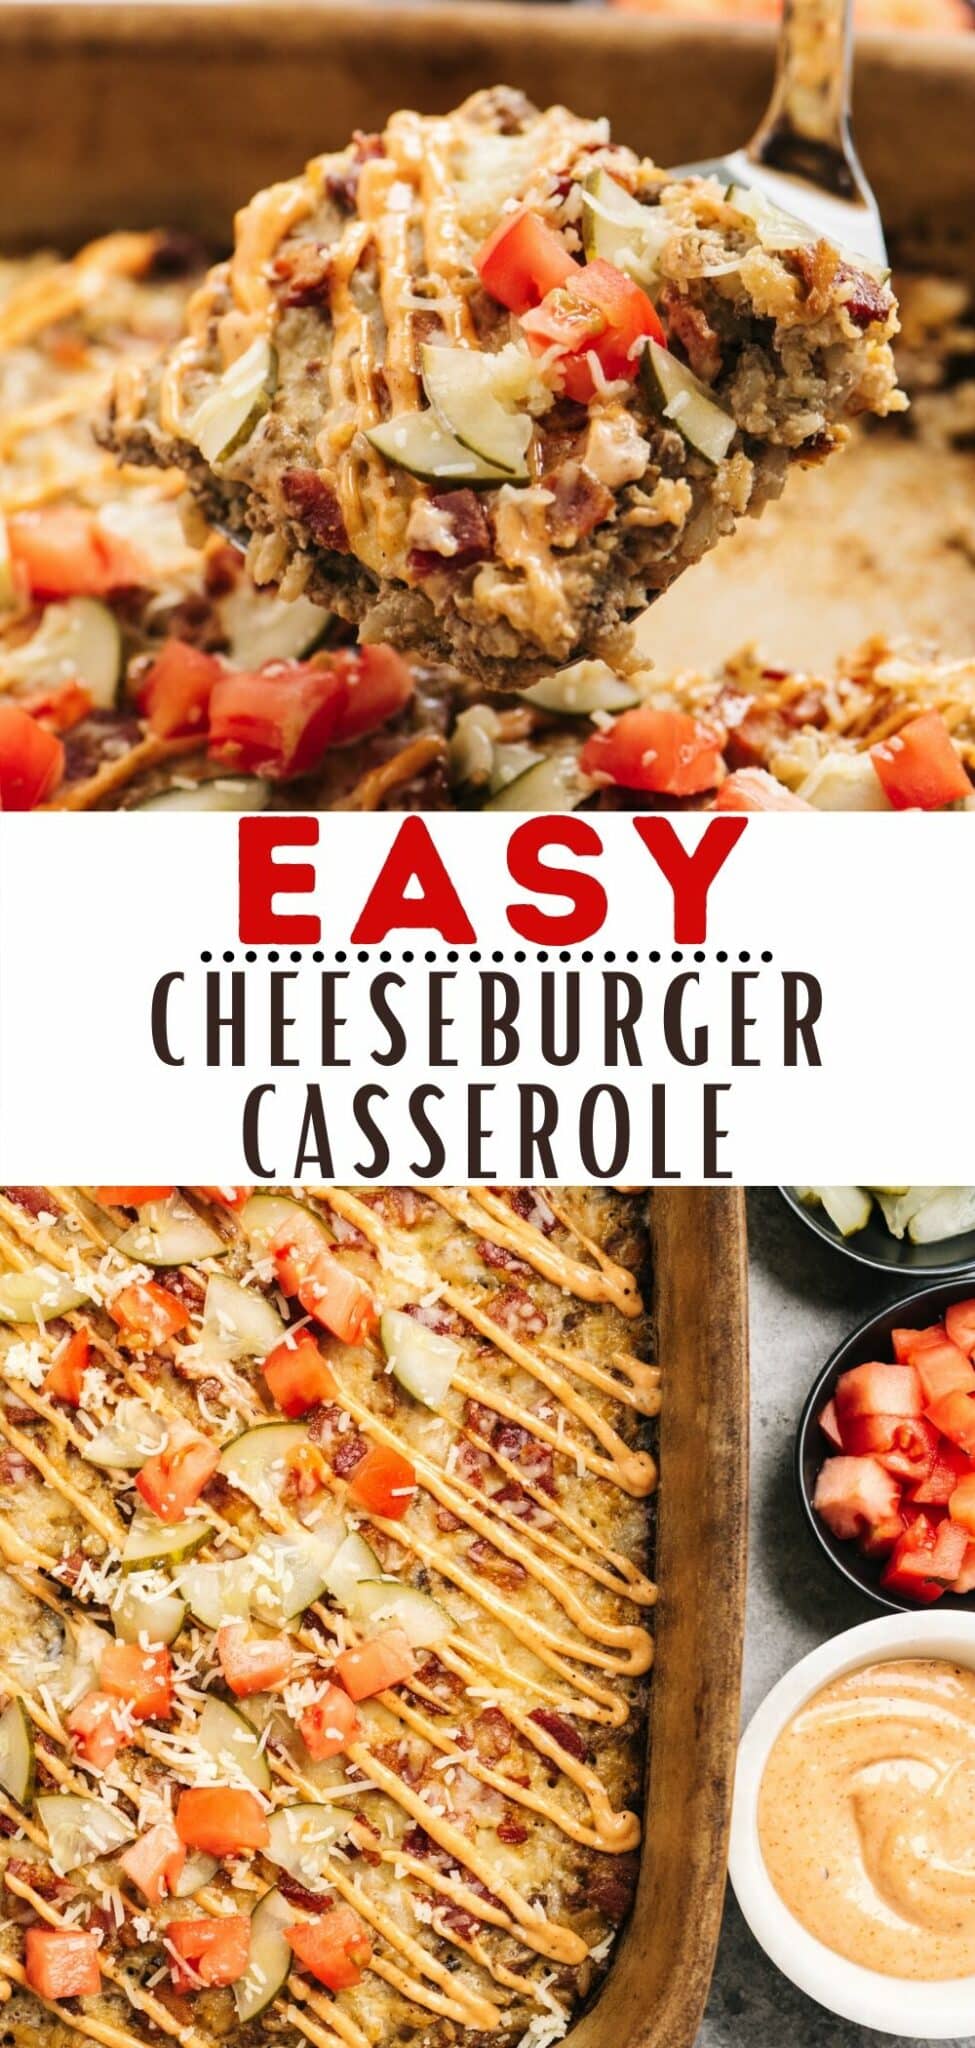 Cheeseburger Casserole - Kim's Cravings